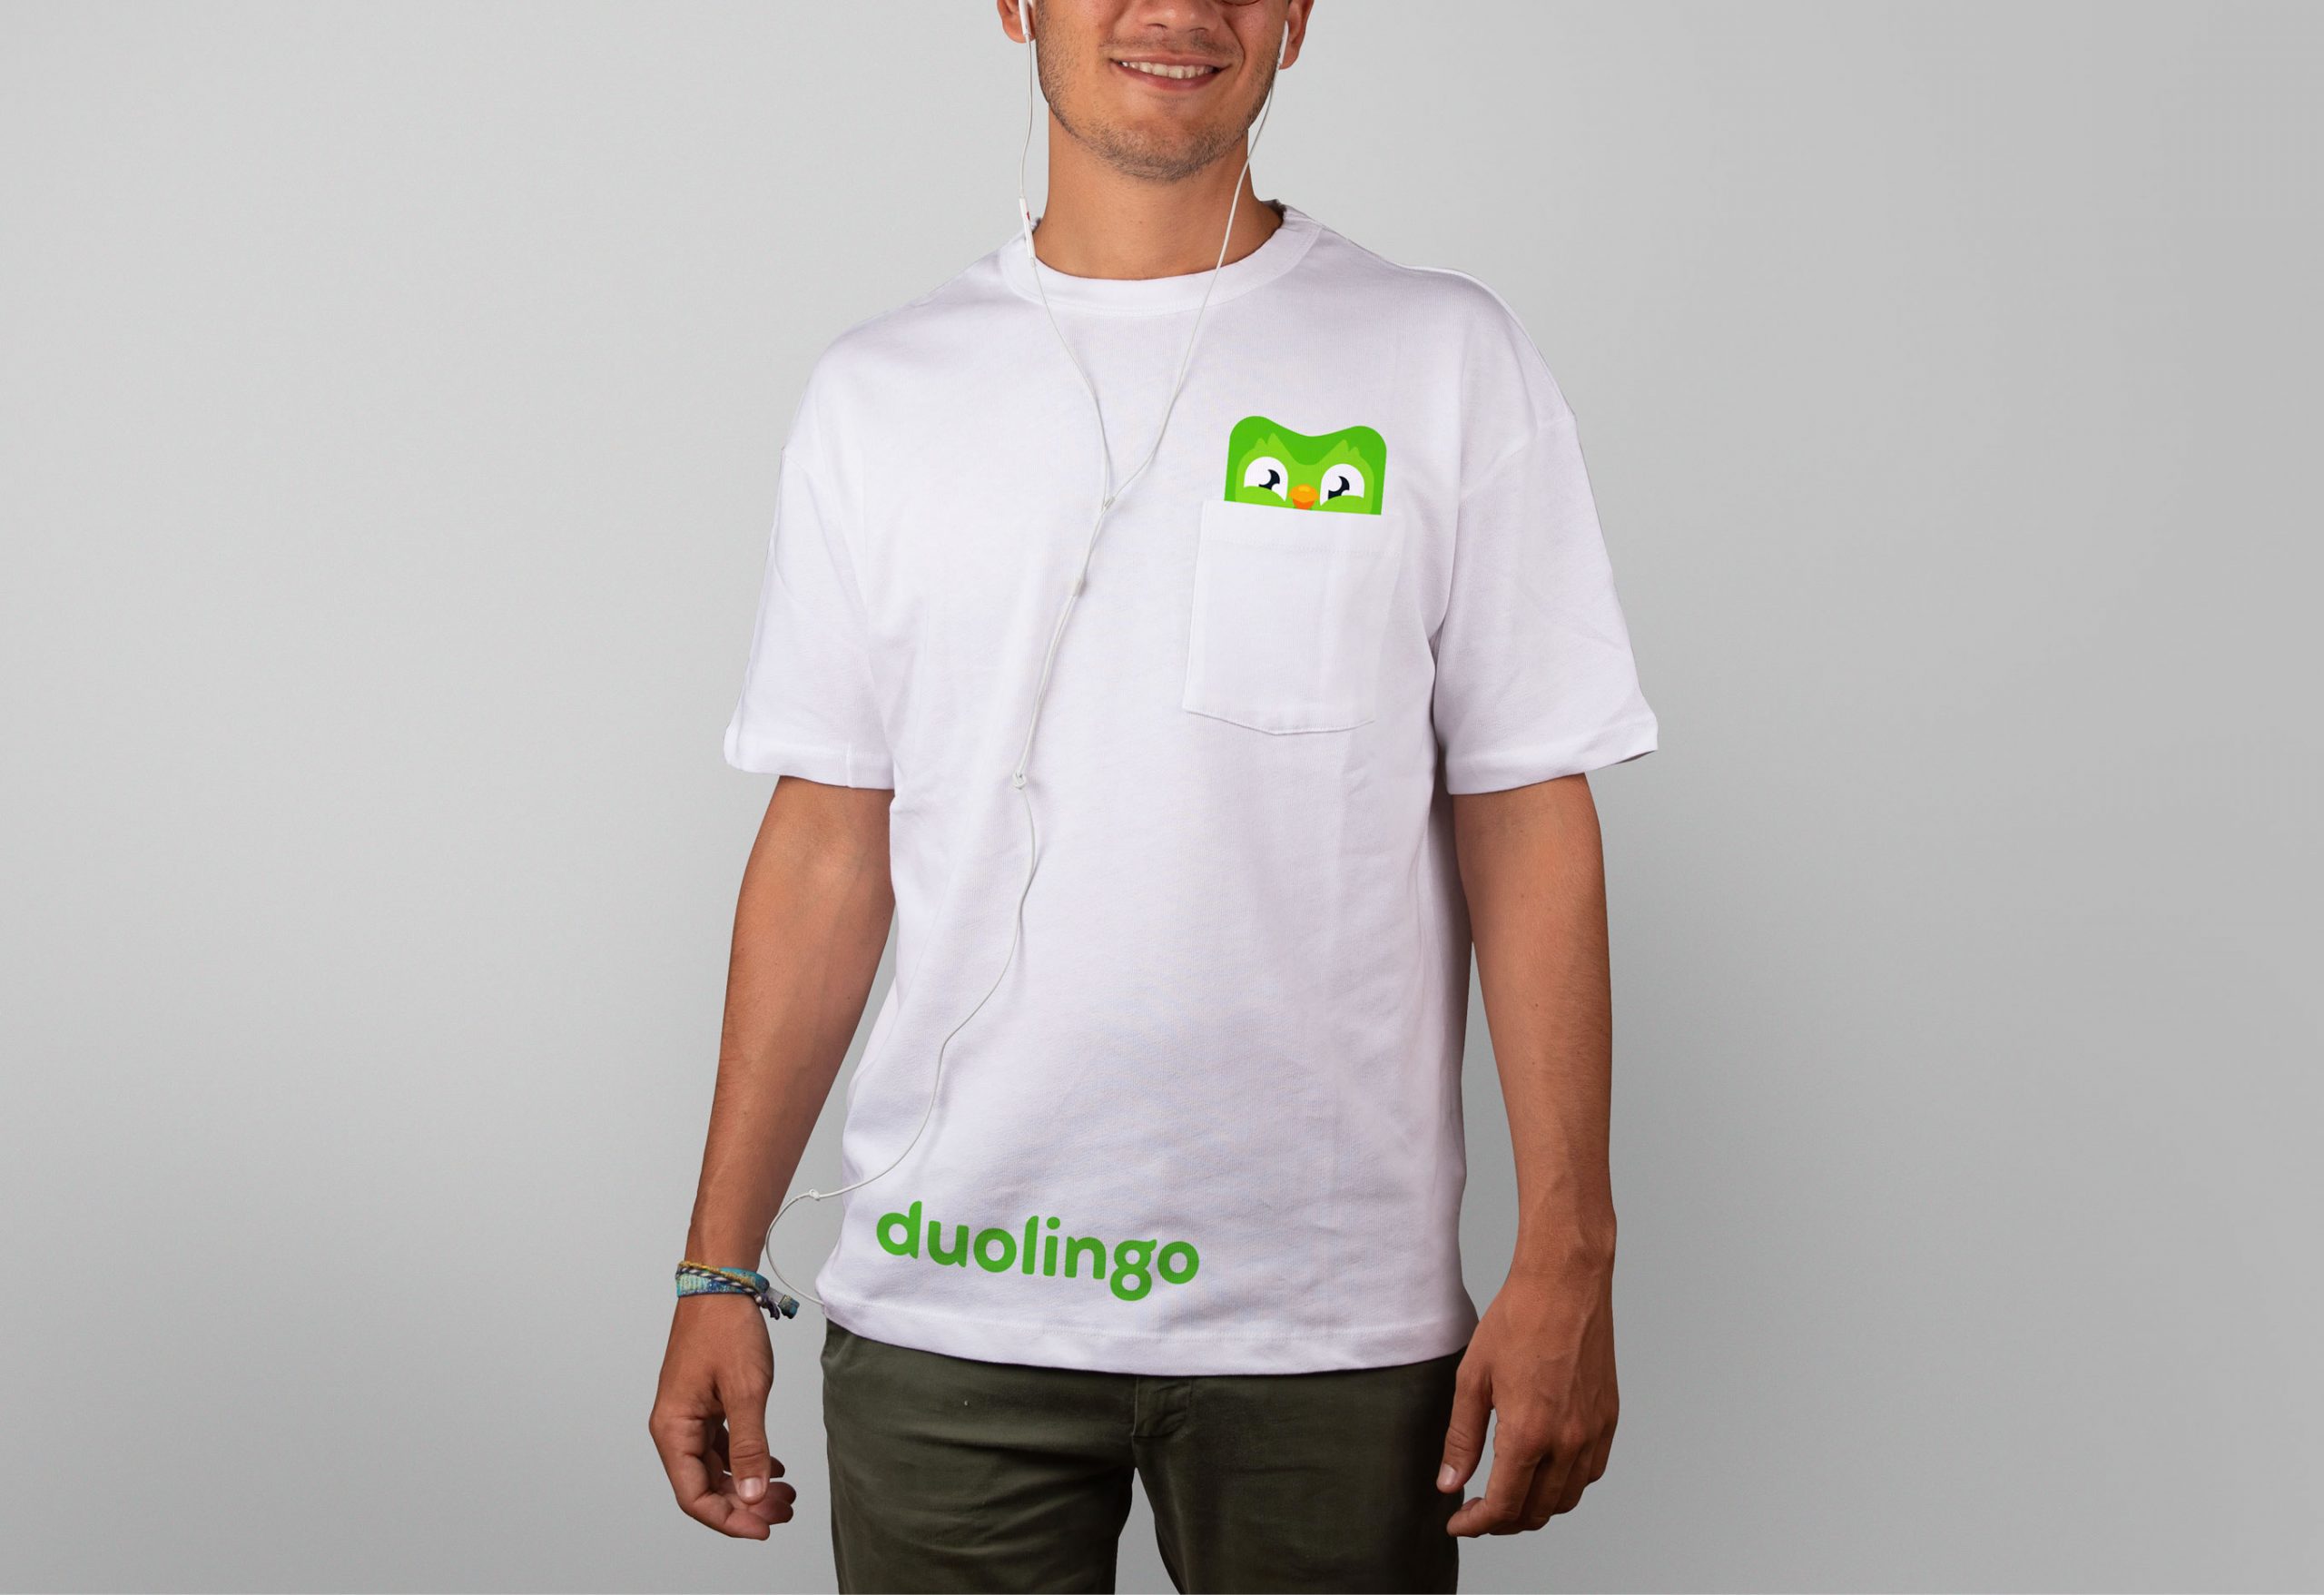 Duolingo_t-shirt-by-Johnson-Banks